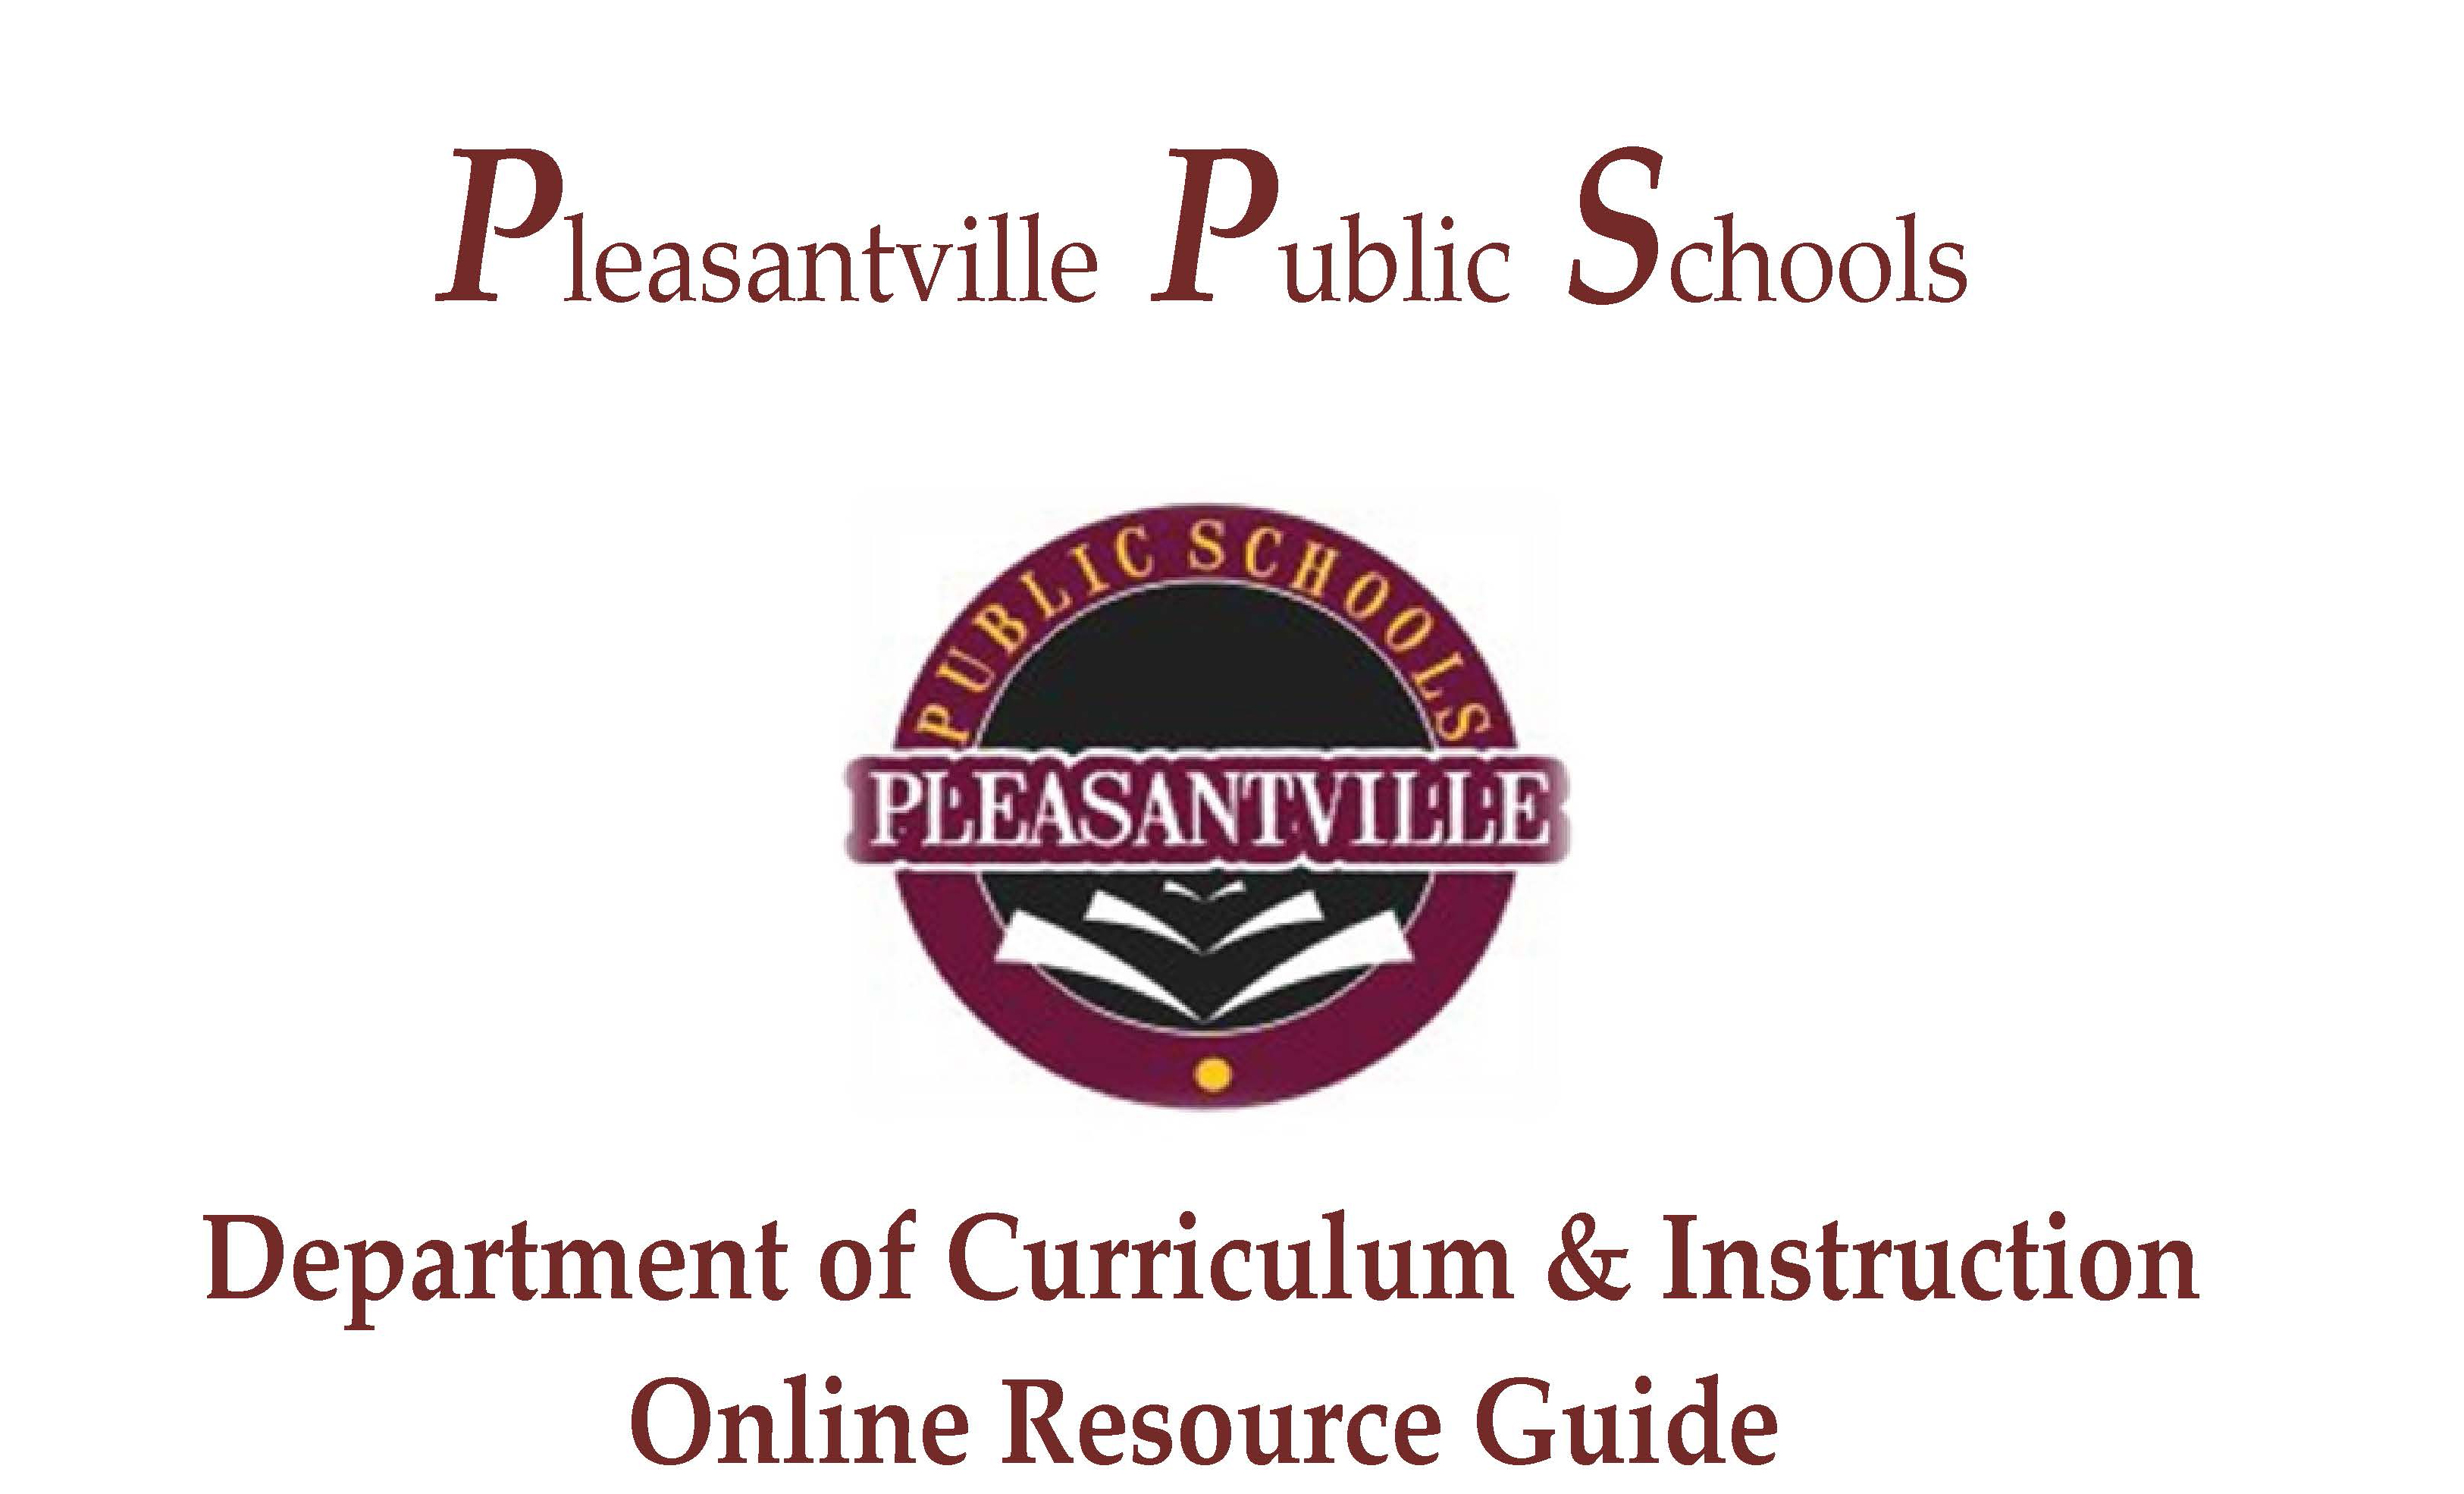 Pleasantville Public Schools Department of Curriculum & Instruction Online Resource Guide.